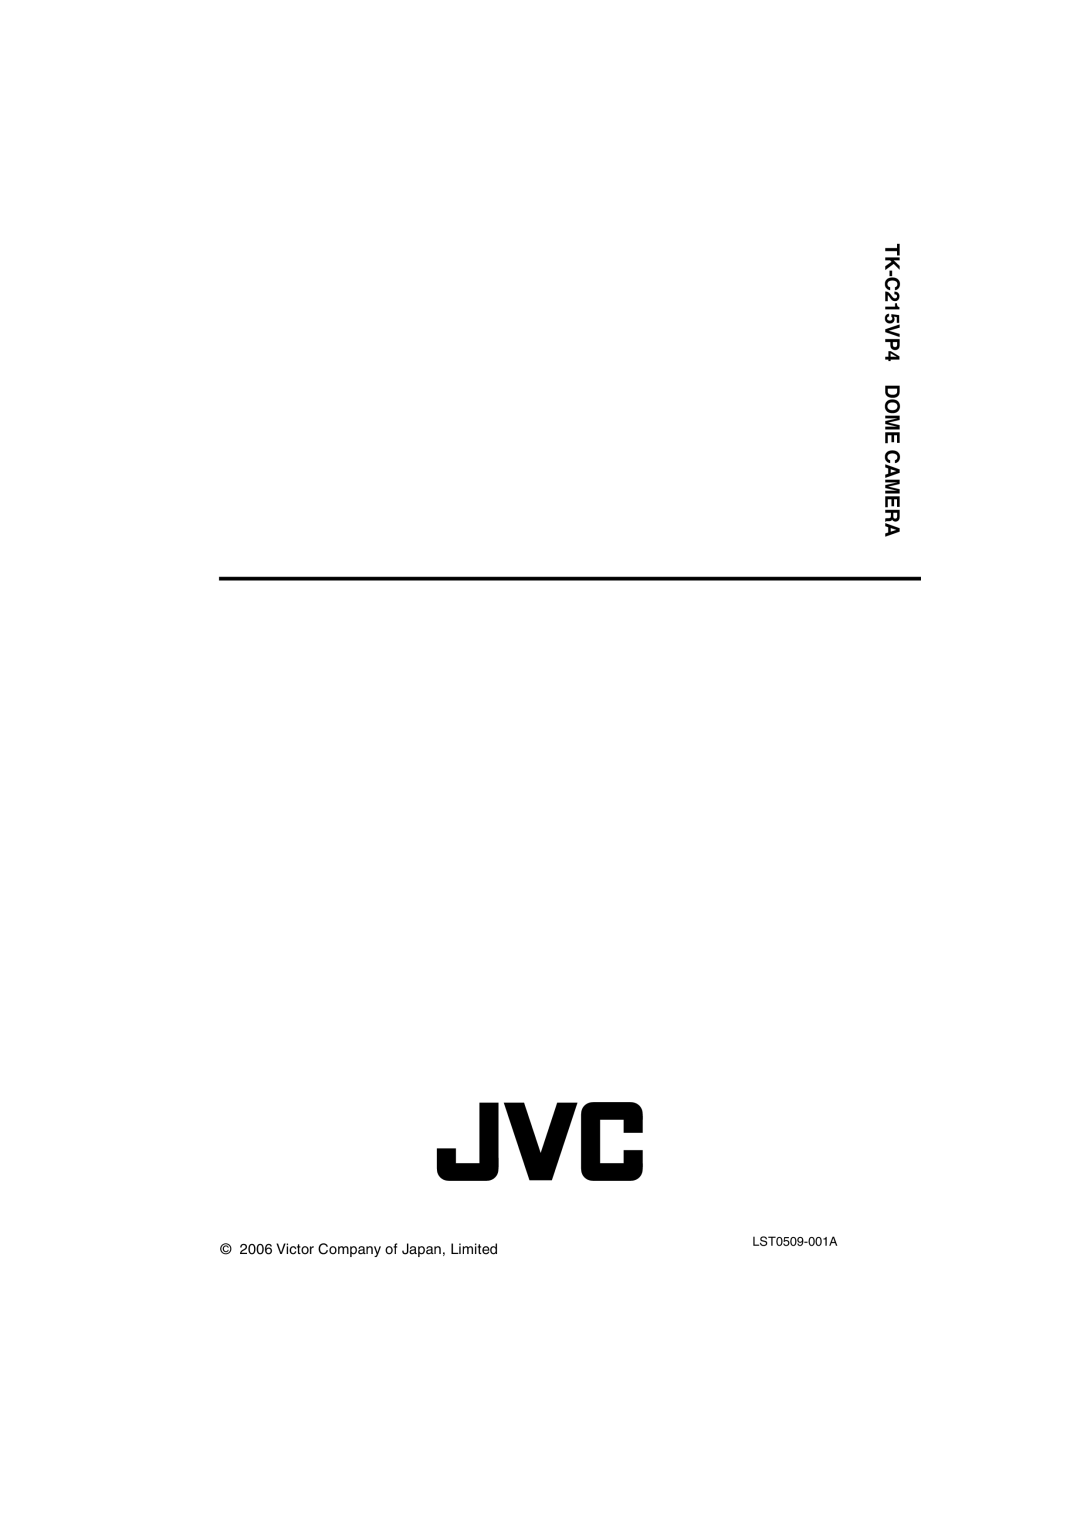 JVC TK-C215VP12 instruction manual TK-C215VP4 DOME CAMERA, Victor Company of Japan, Limited, LST0509-001A 